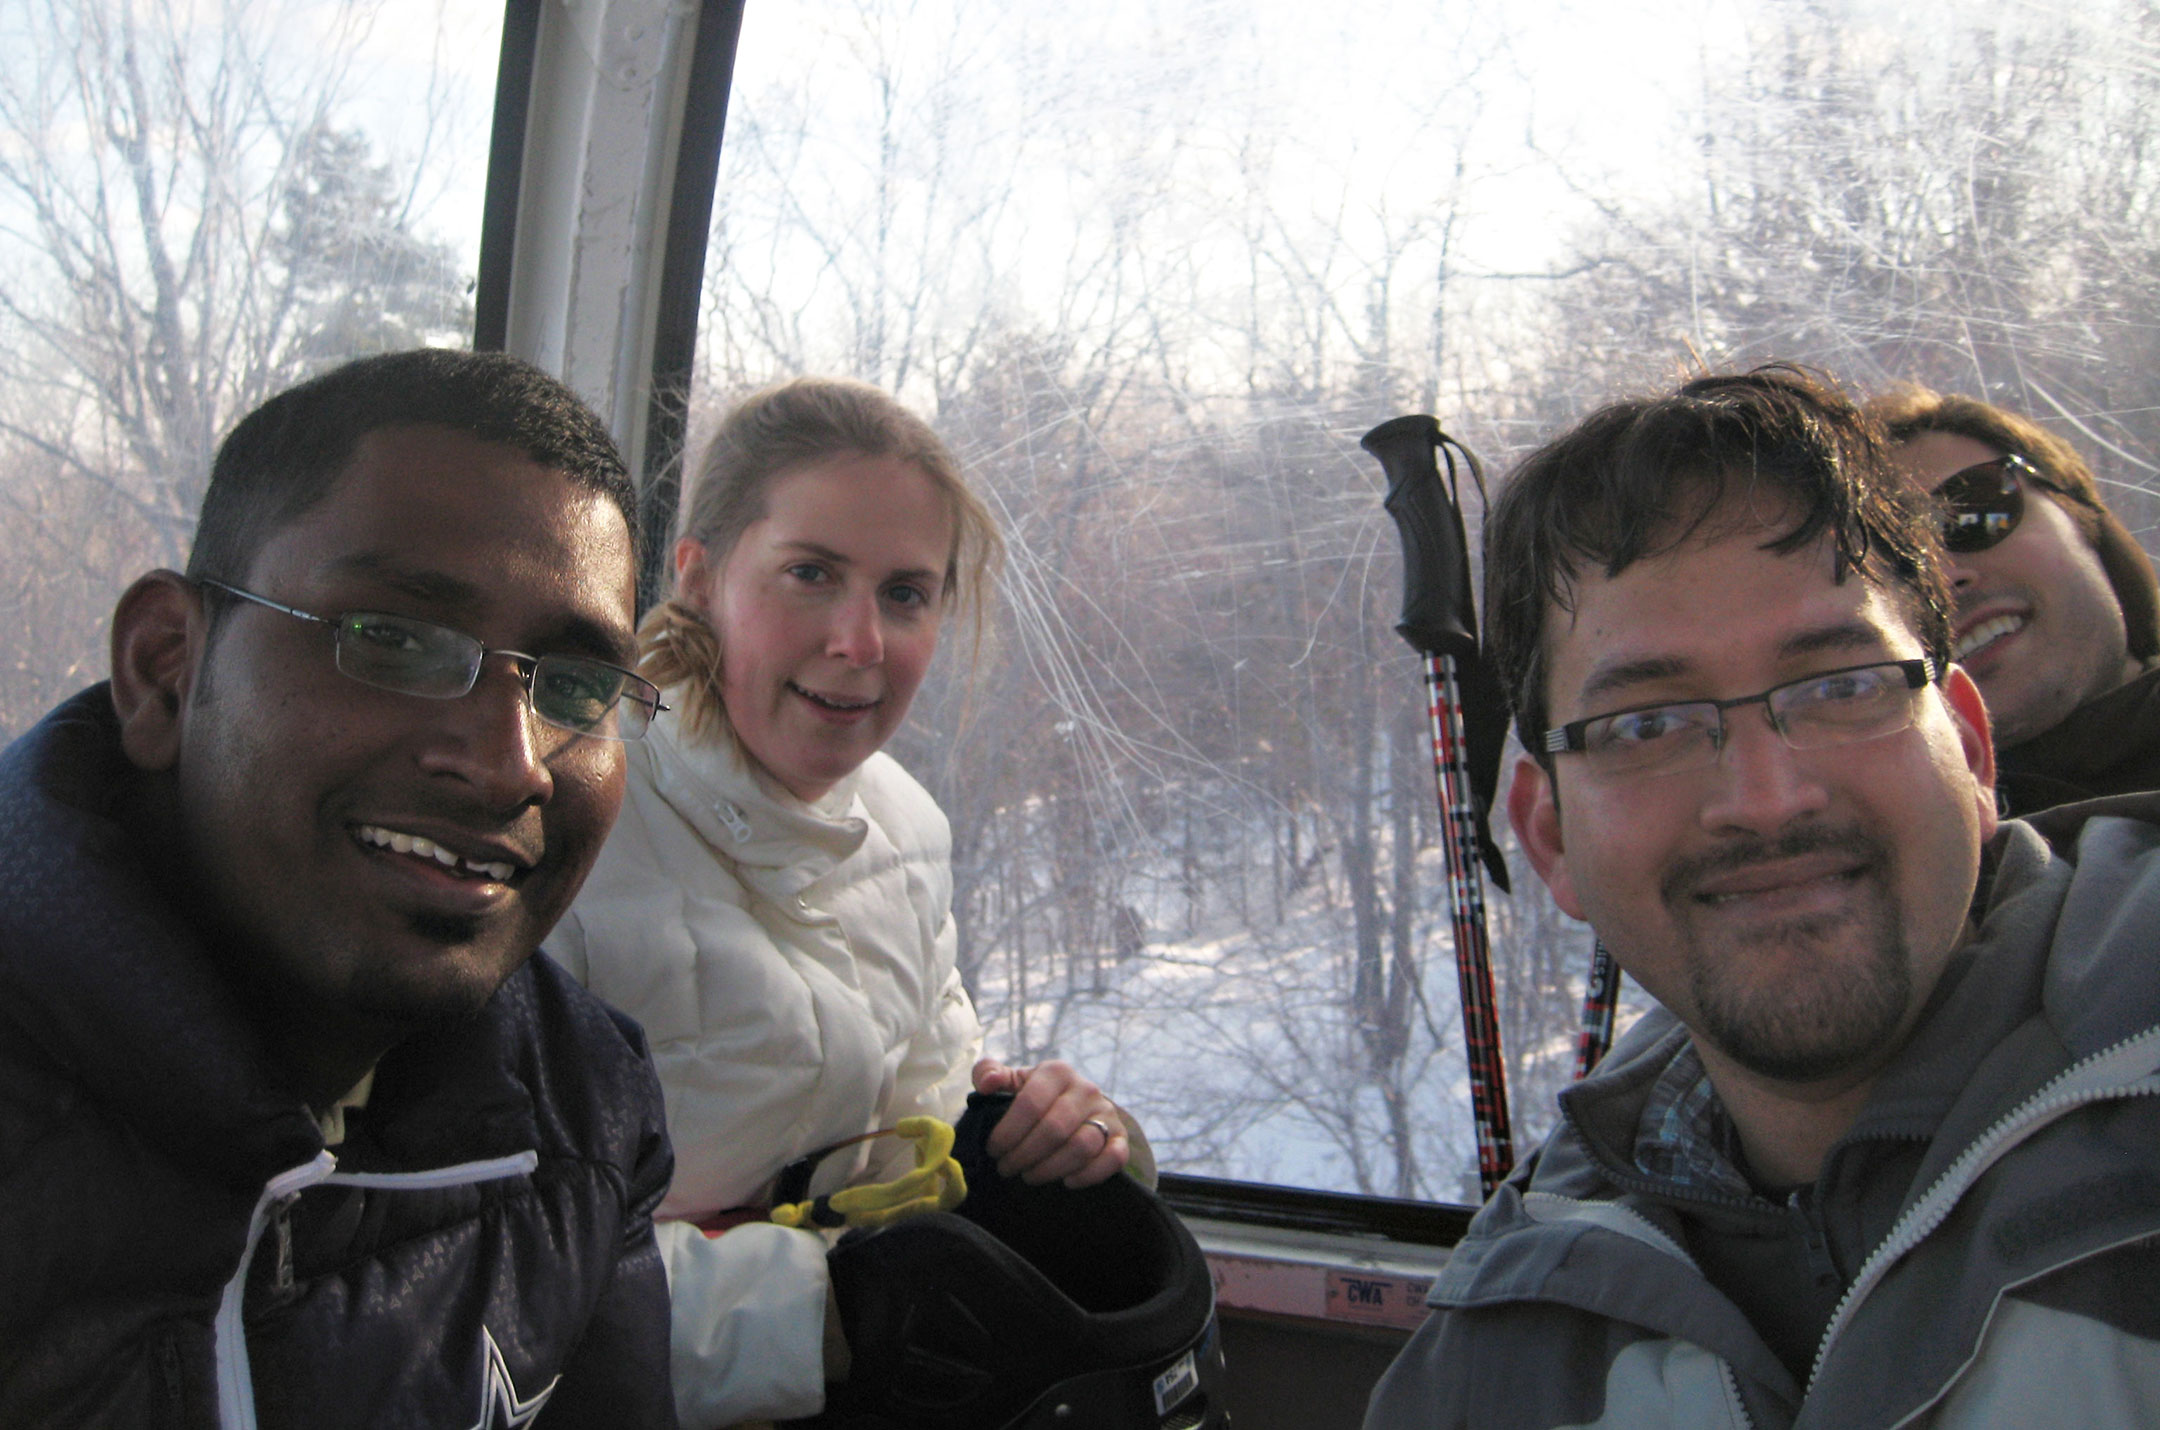 Raja Jothi, Sarah Teichmann (EMBL-EBI), Madan Babu (MRC-LMB), and Emmanuel Levy (Weizmann Institute) on the ski slopes